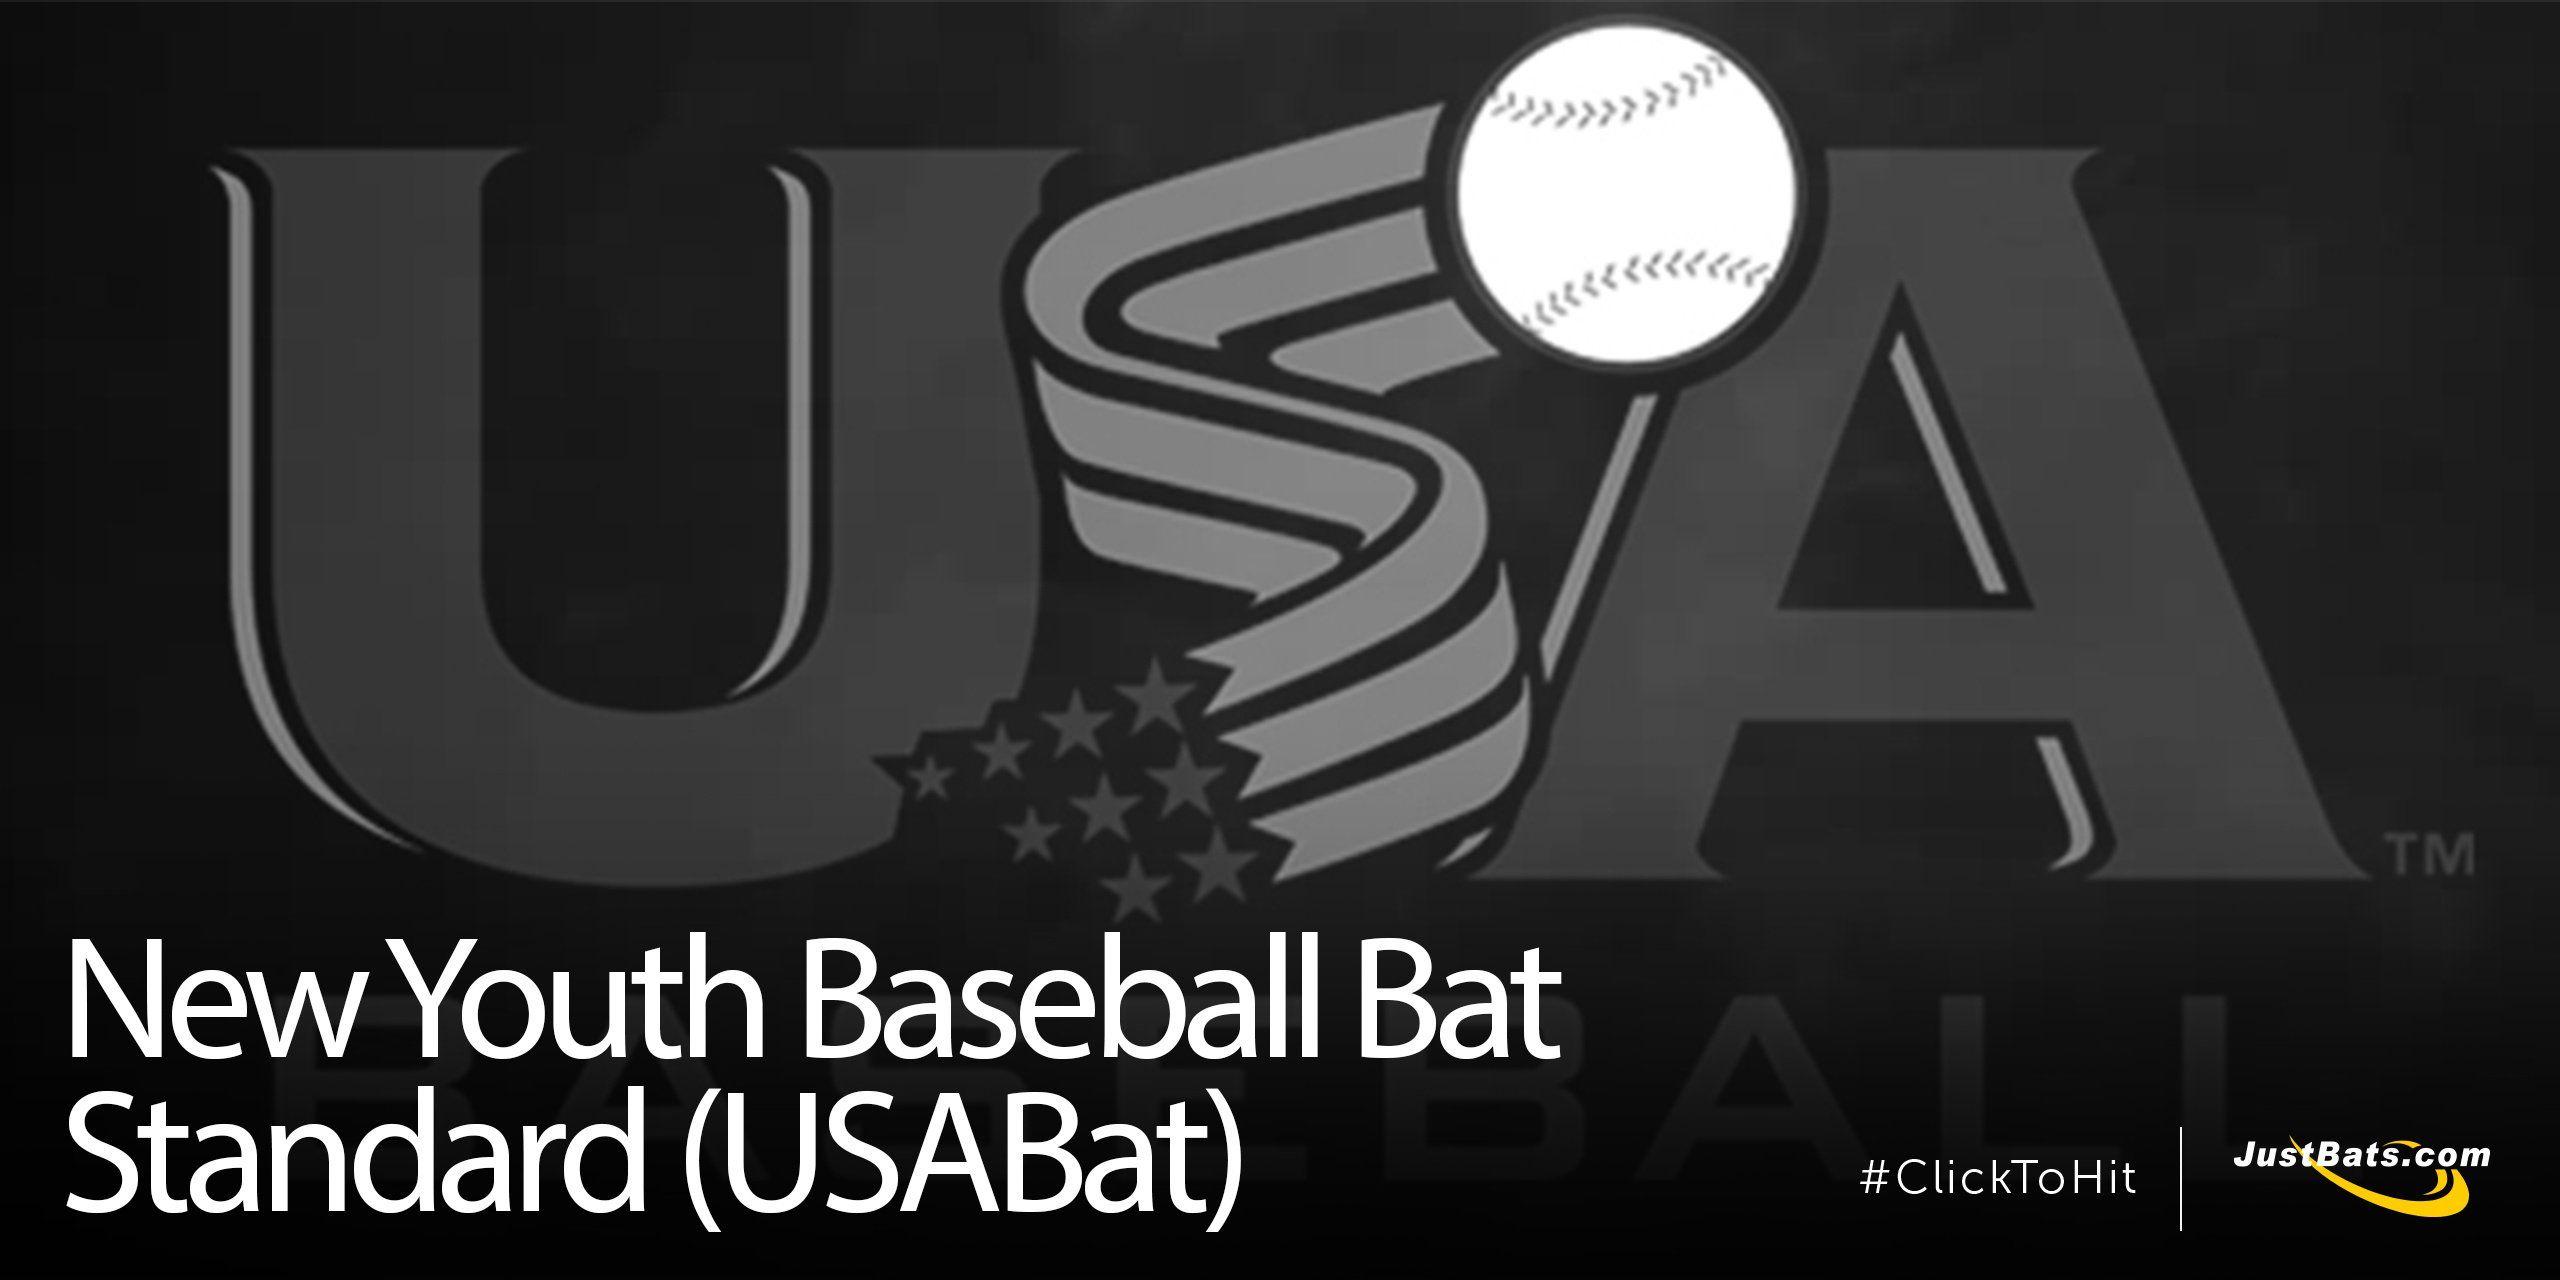 New Bat Logo - New Youth Baseball Bat Standard (USABat) Jan. 2018